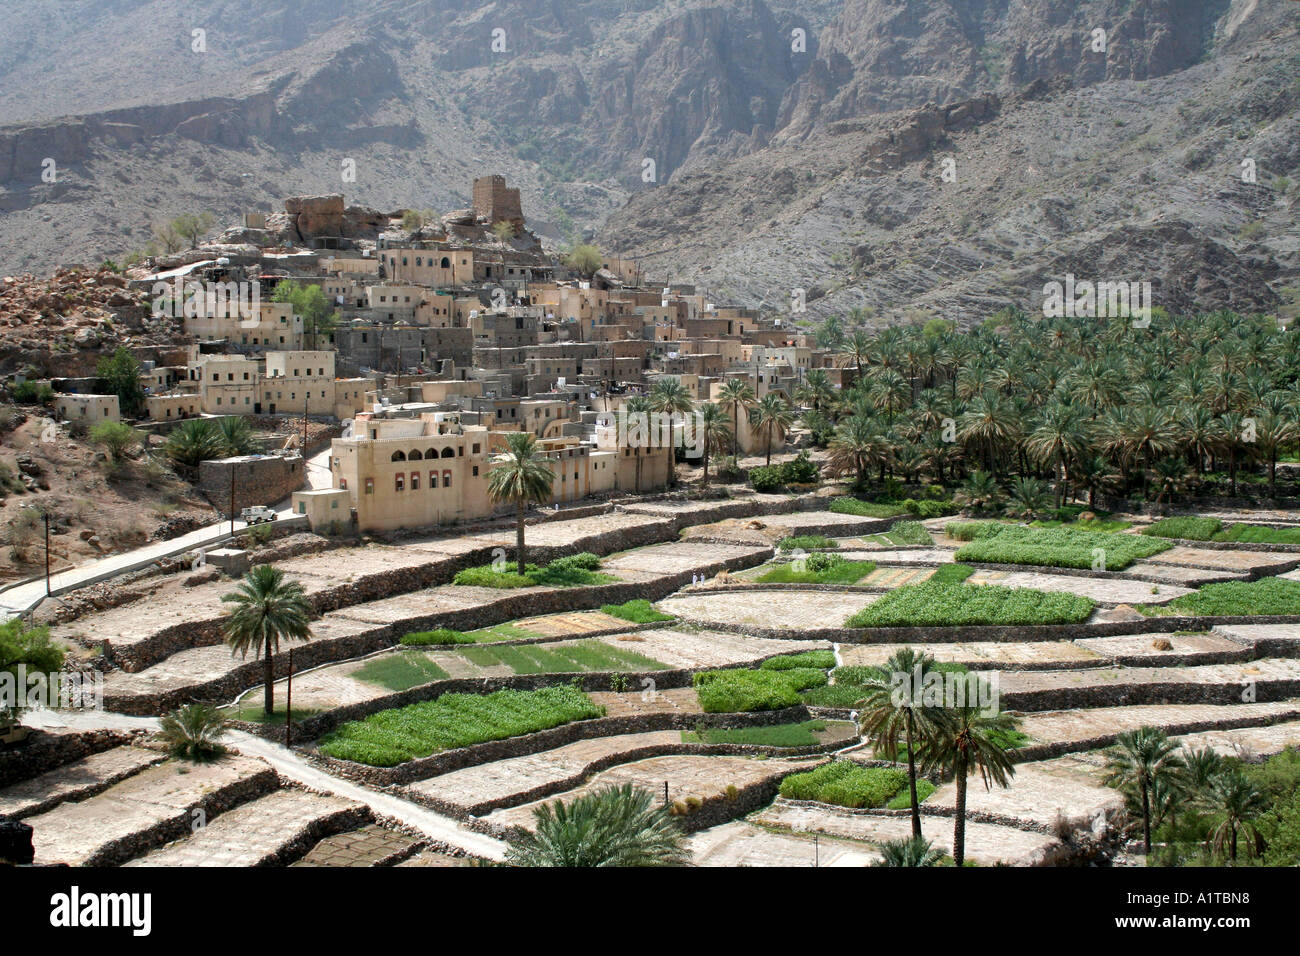 Bilad Sayt village Wadi Bani Hajar Mountains Oman Stock Photo